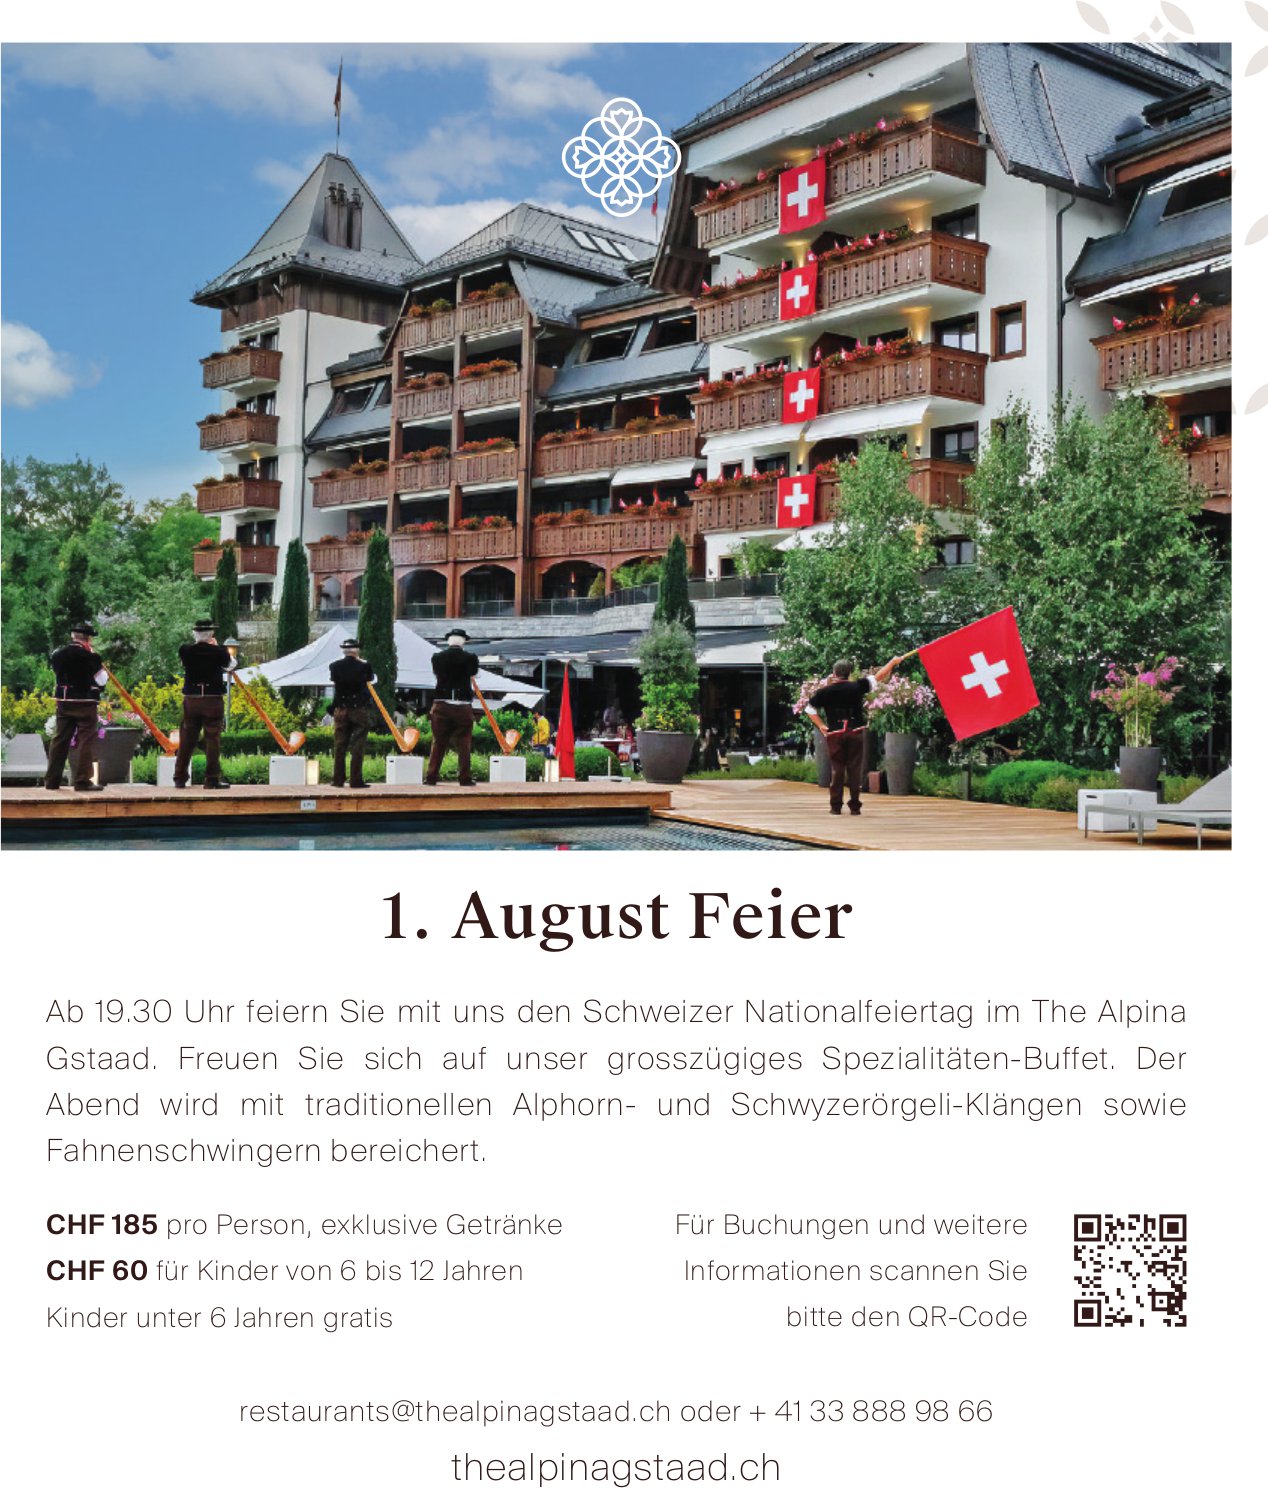 1. August Feier, The Alpina Gstaad